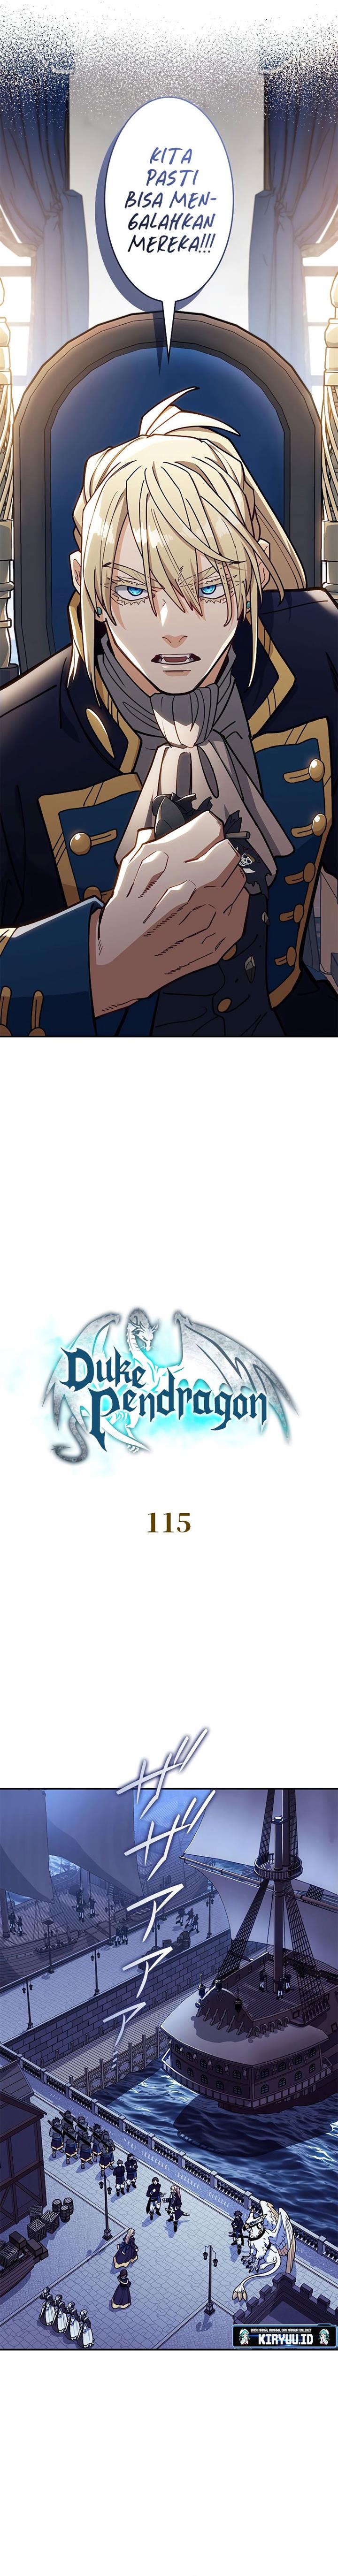 White Dragon Duke: Pendragon Chapter 115